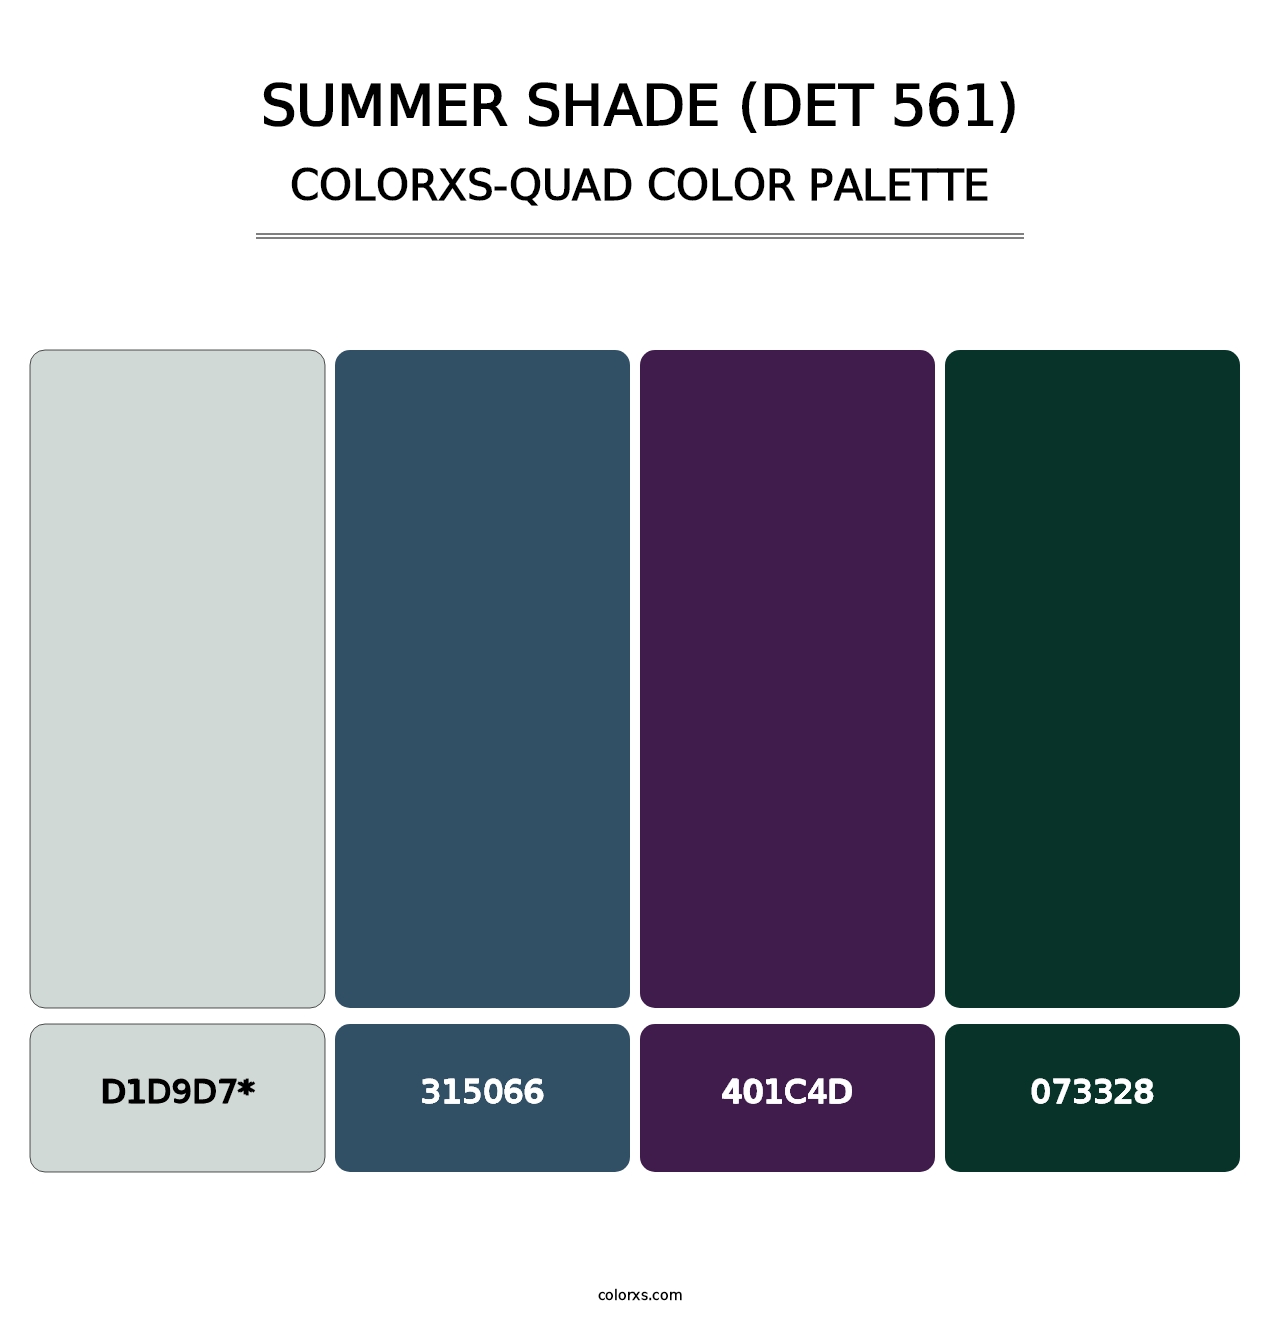 Summer Shade (DET 561) - Colorxs Quad Palette